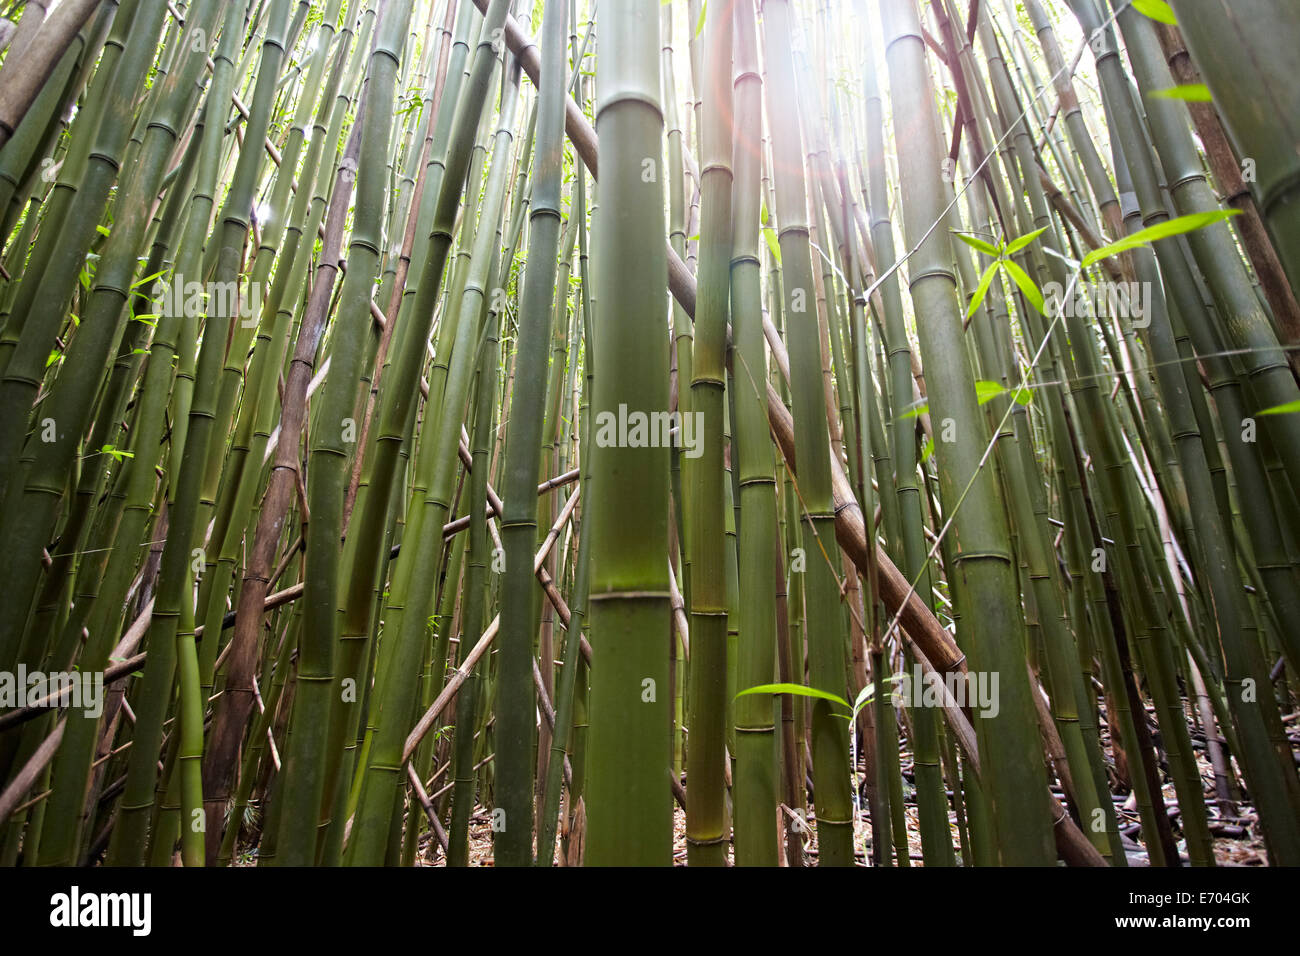 Dettaglio di bambù steli, Maui, Hawaii, STATI UNITI D'AMERICA Foto Stock